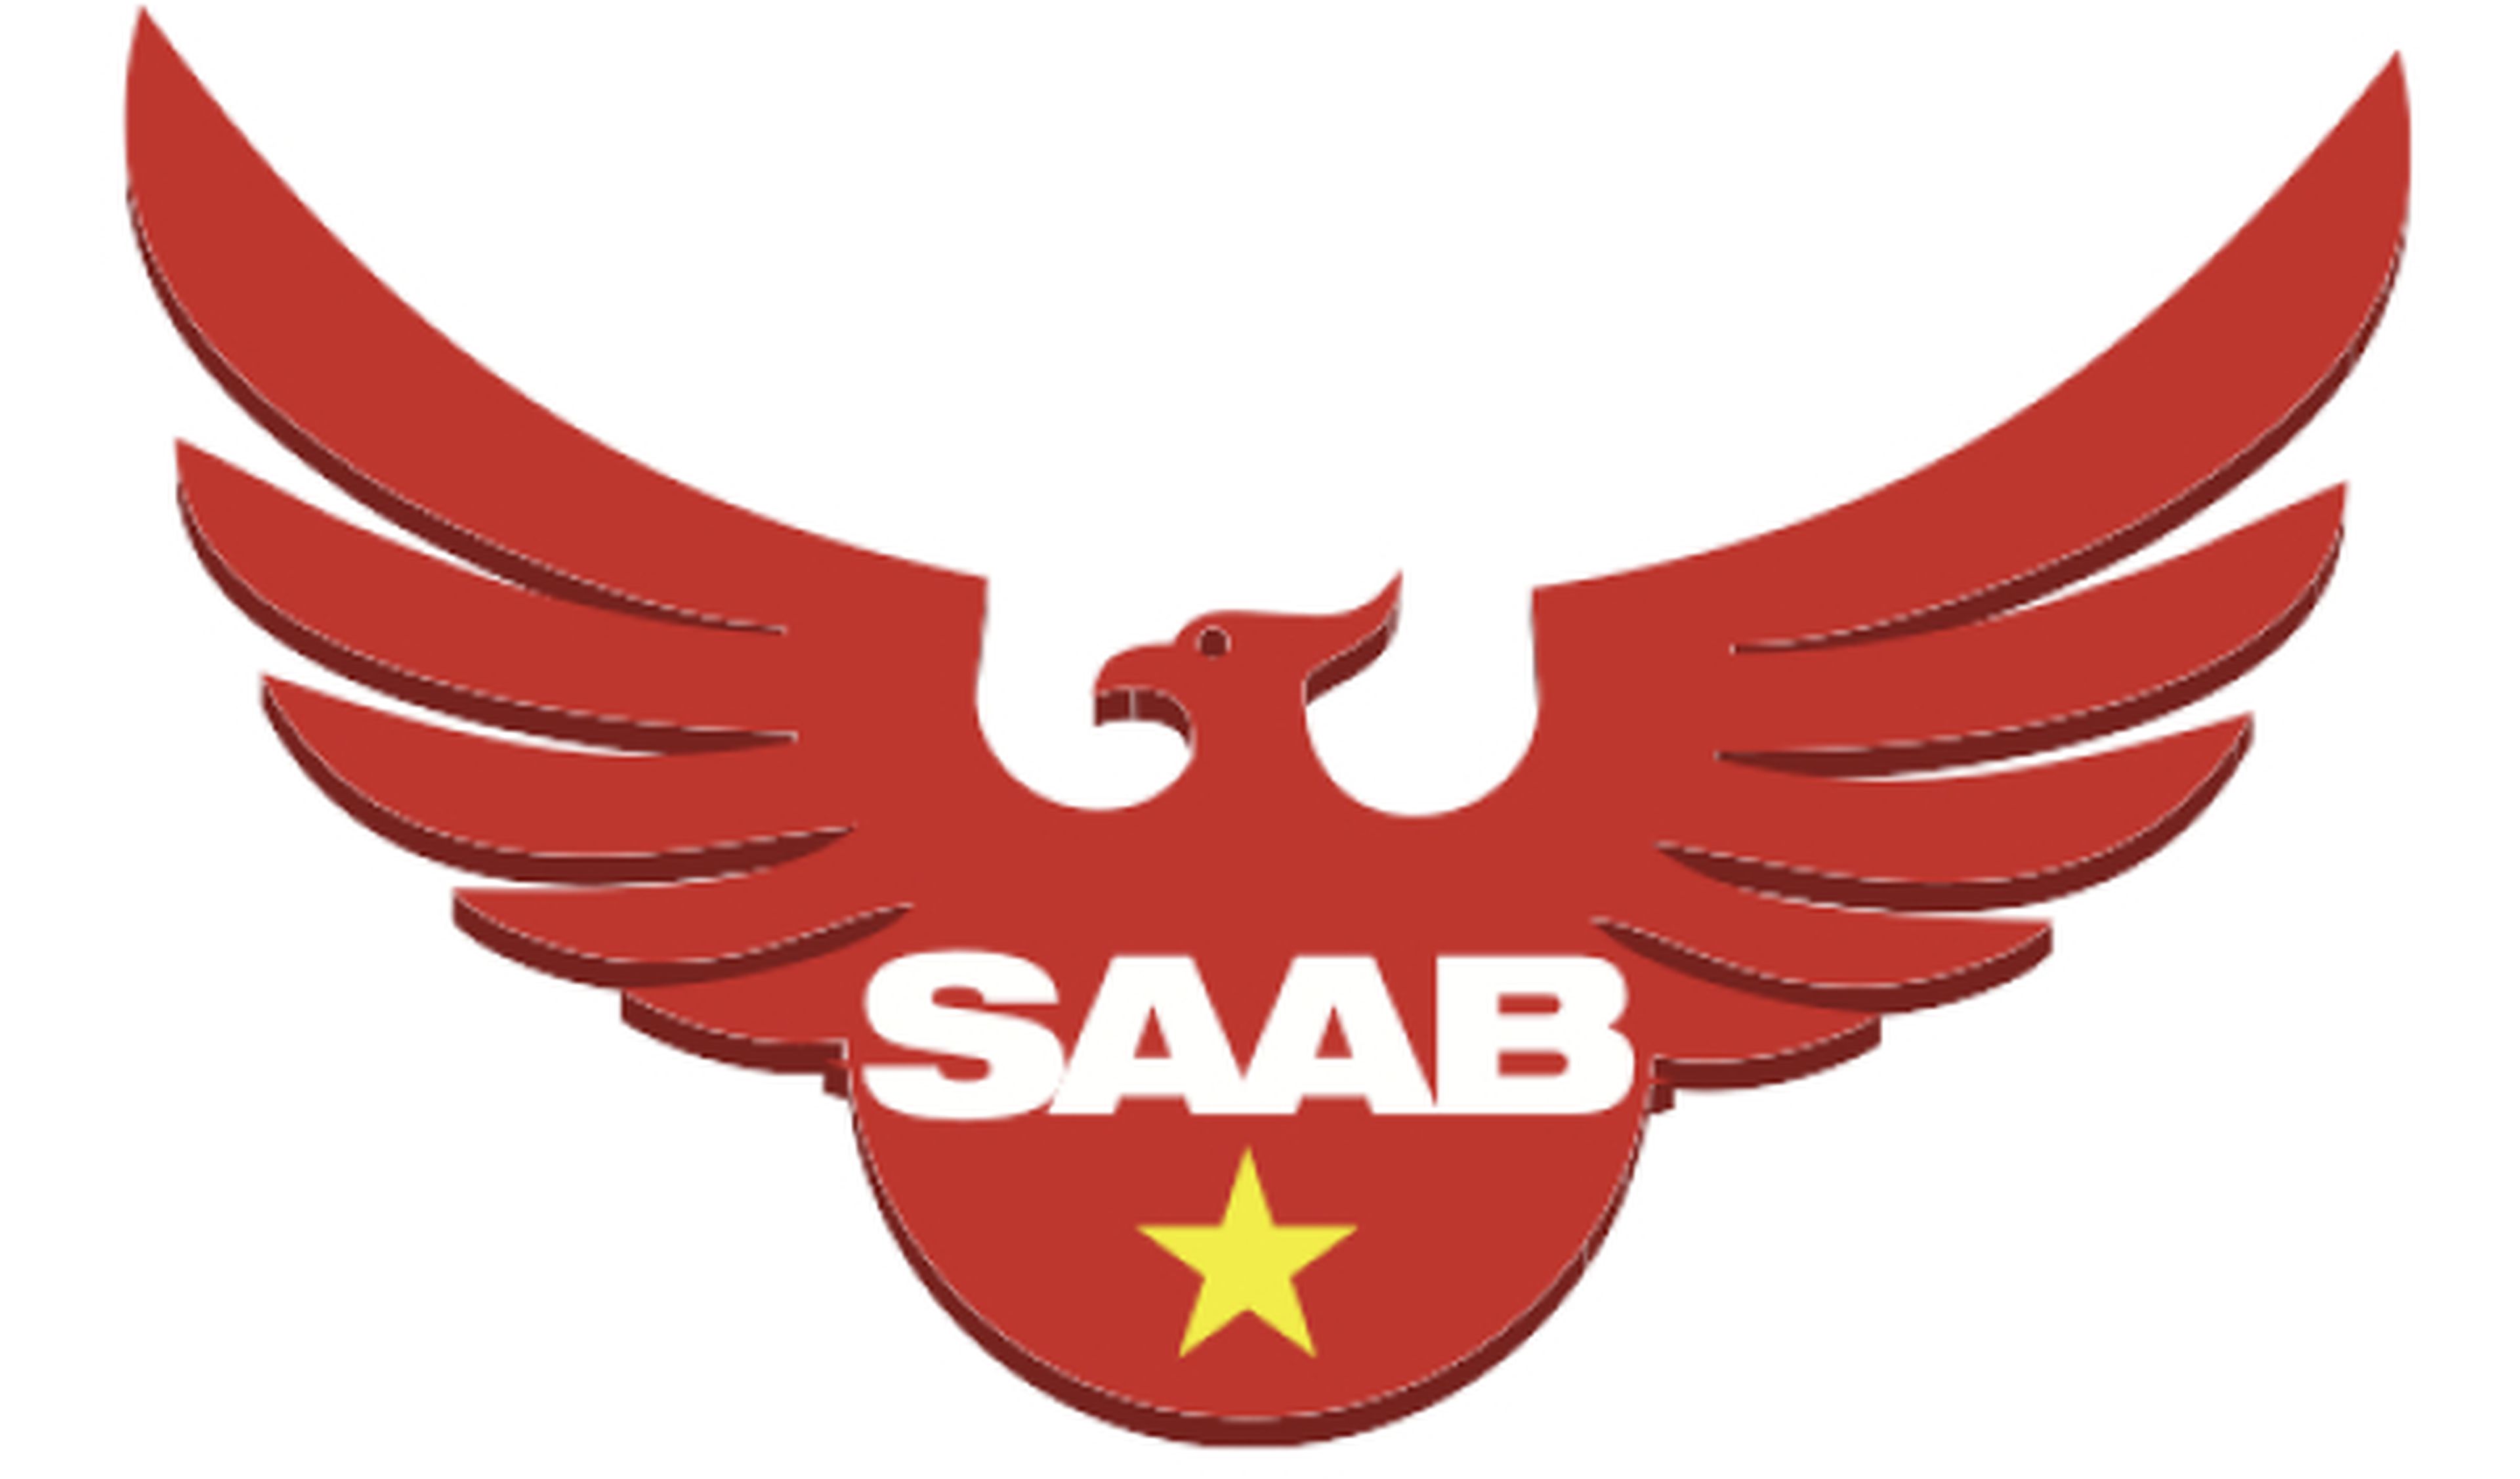 Posible nuevo logo Saab